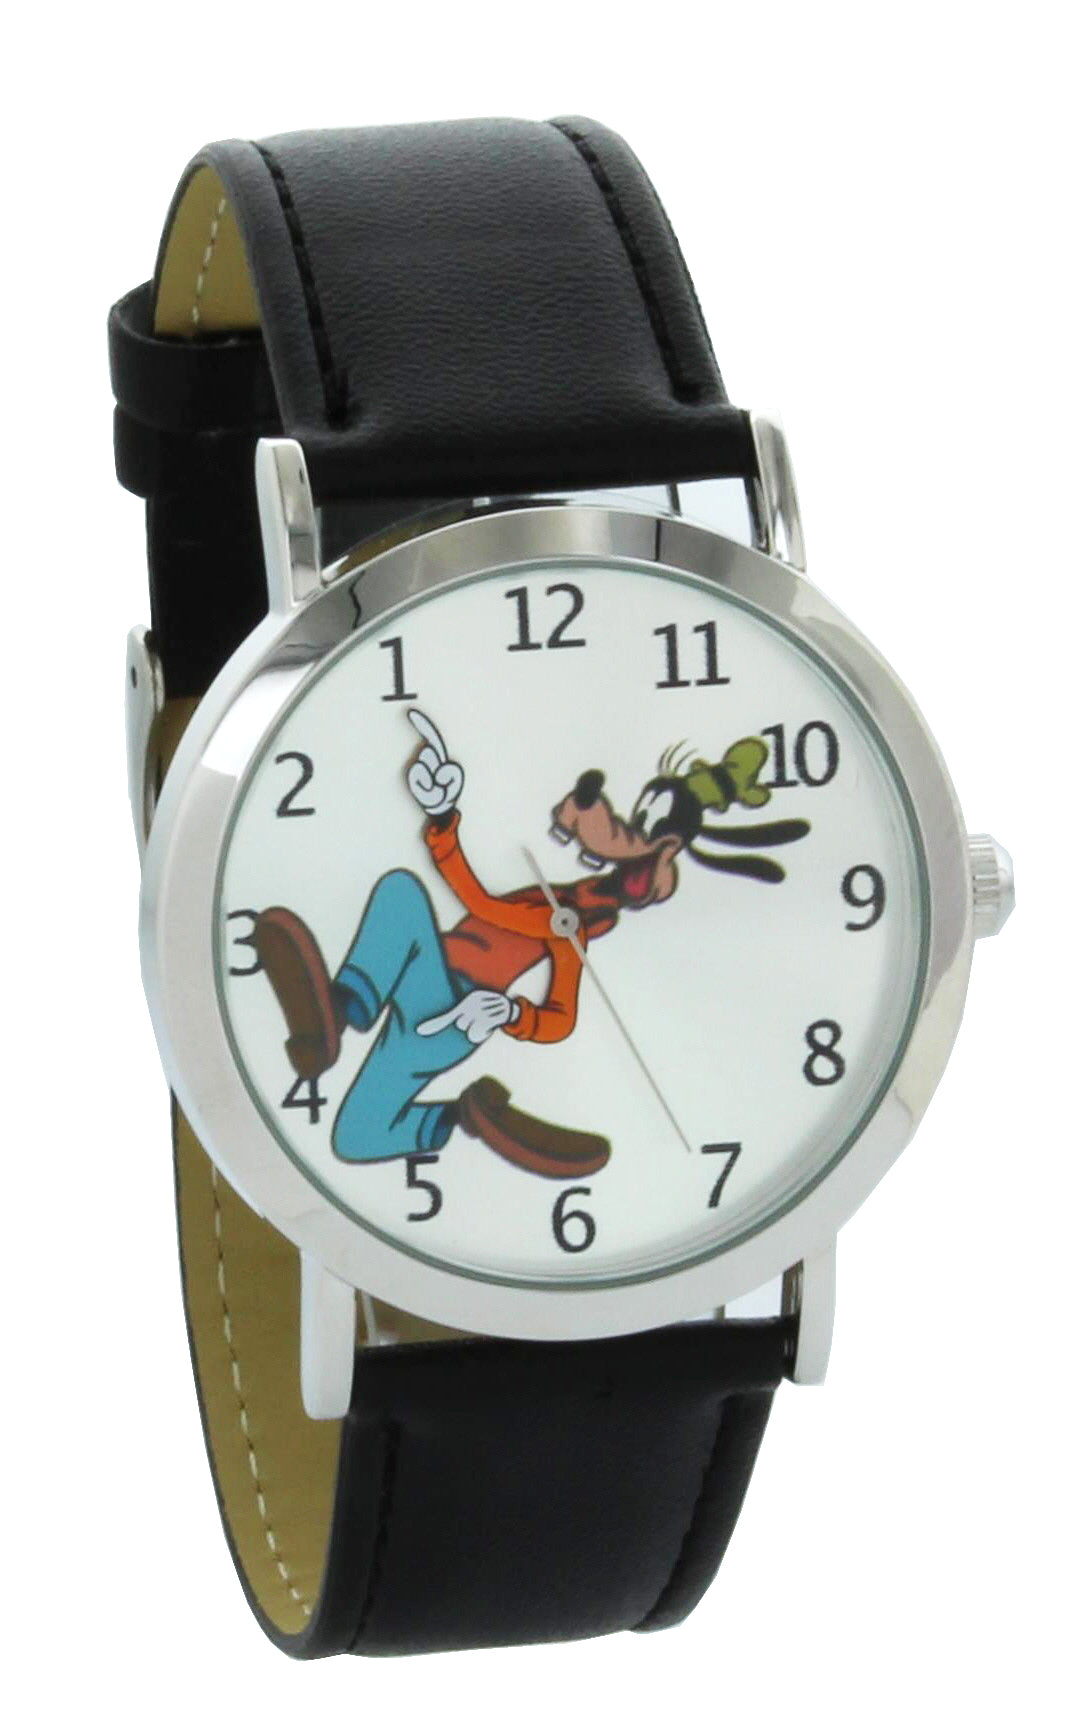 Model: Disney Vintage Style Backward Ticking Goofy Watch 